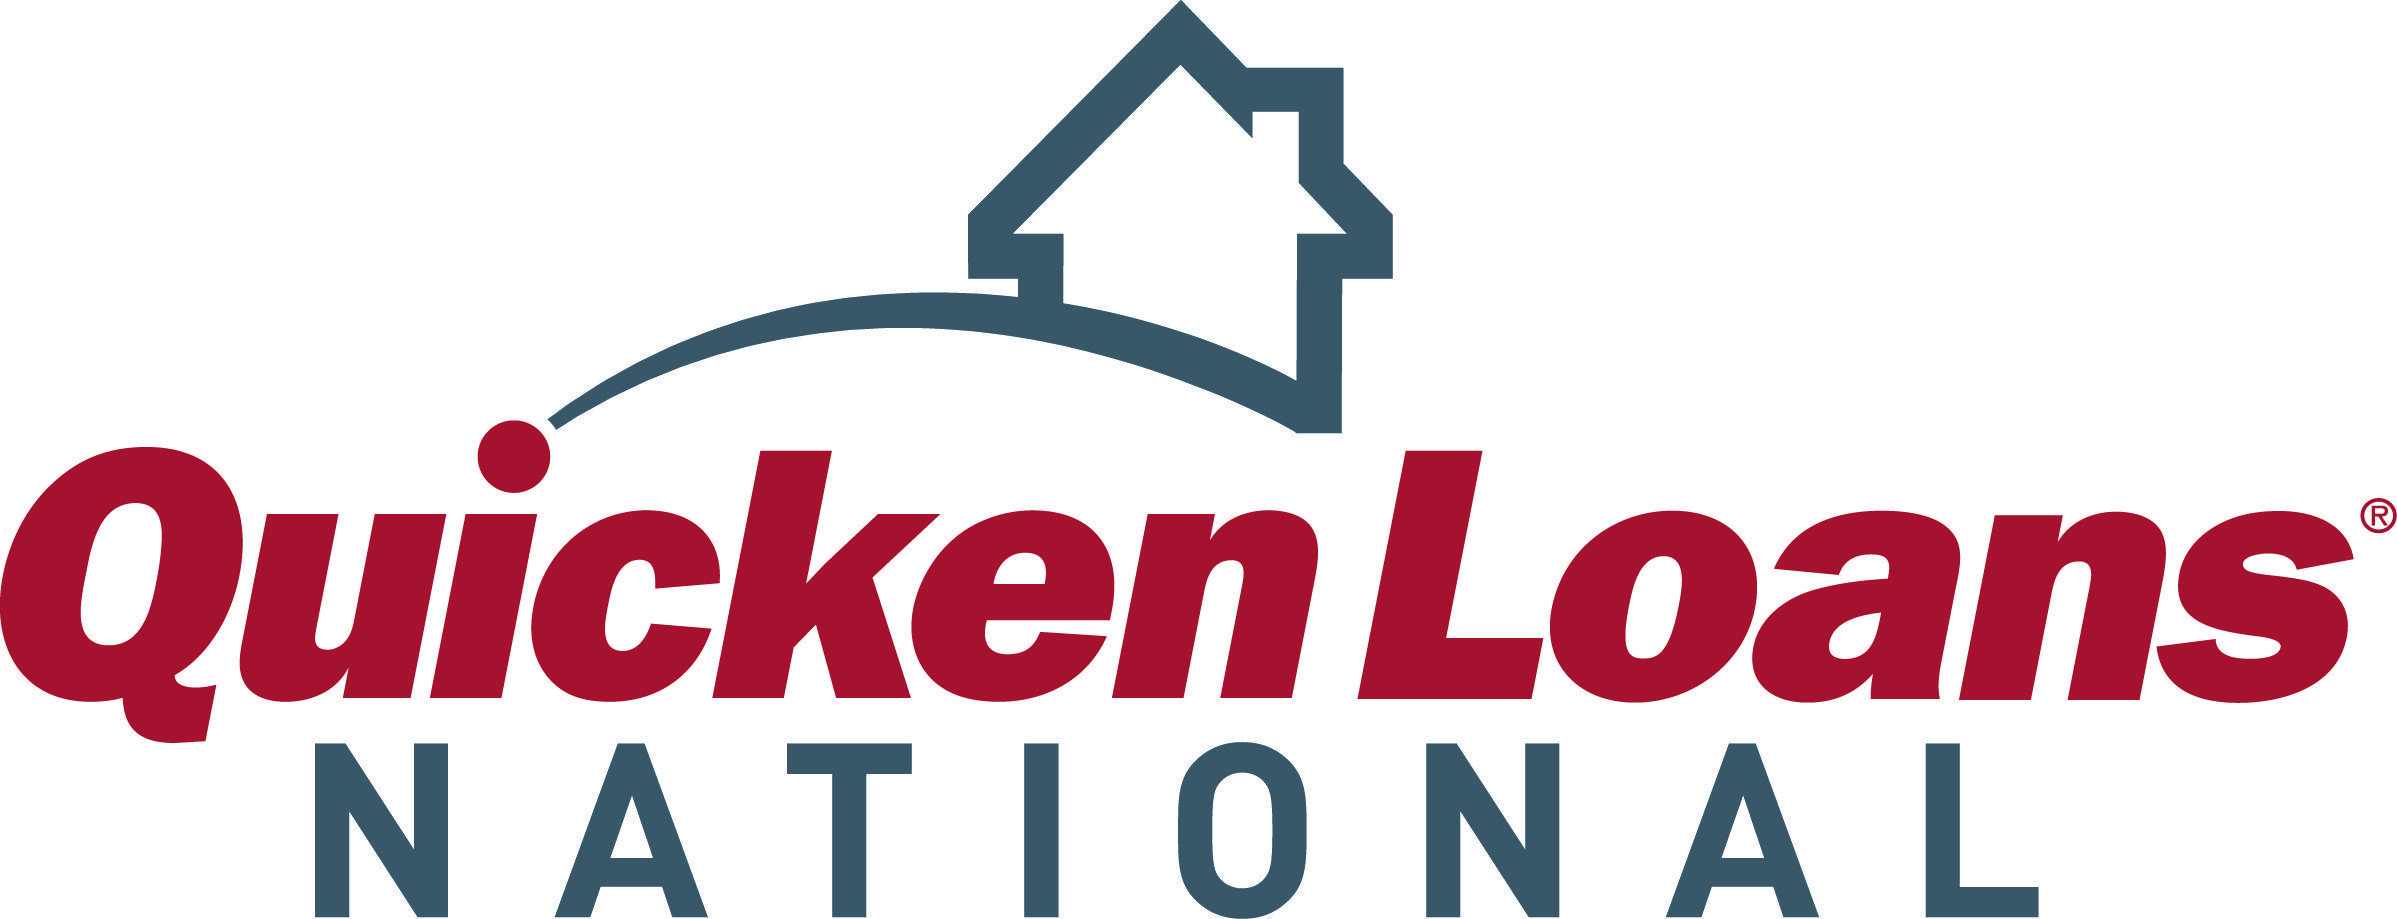 Quicken Loans Logo - Fantasy Four :: Quicken Loans National | NG NATION — Nike Golf Fan Blog